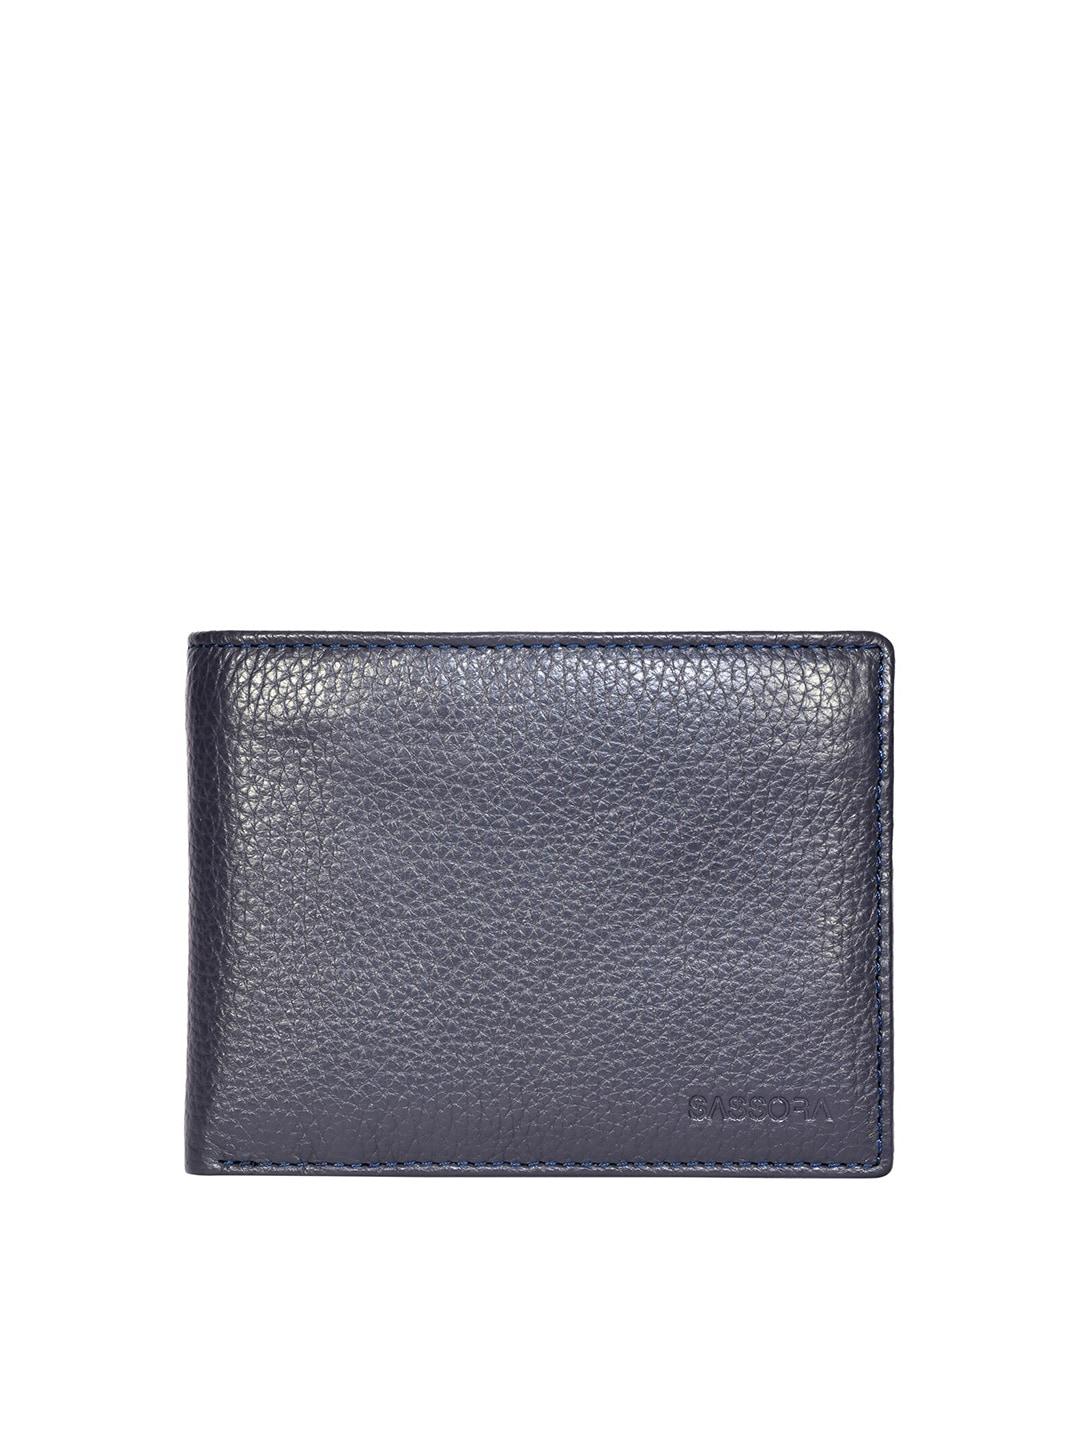 sassora men genuine leather rfid two fold wallet